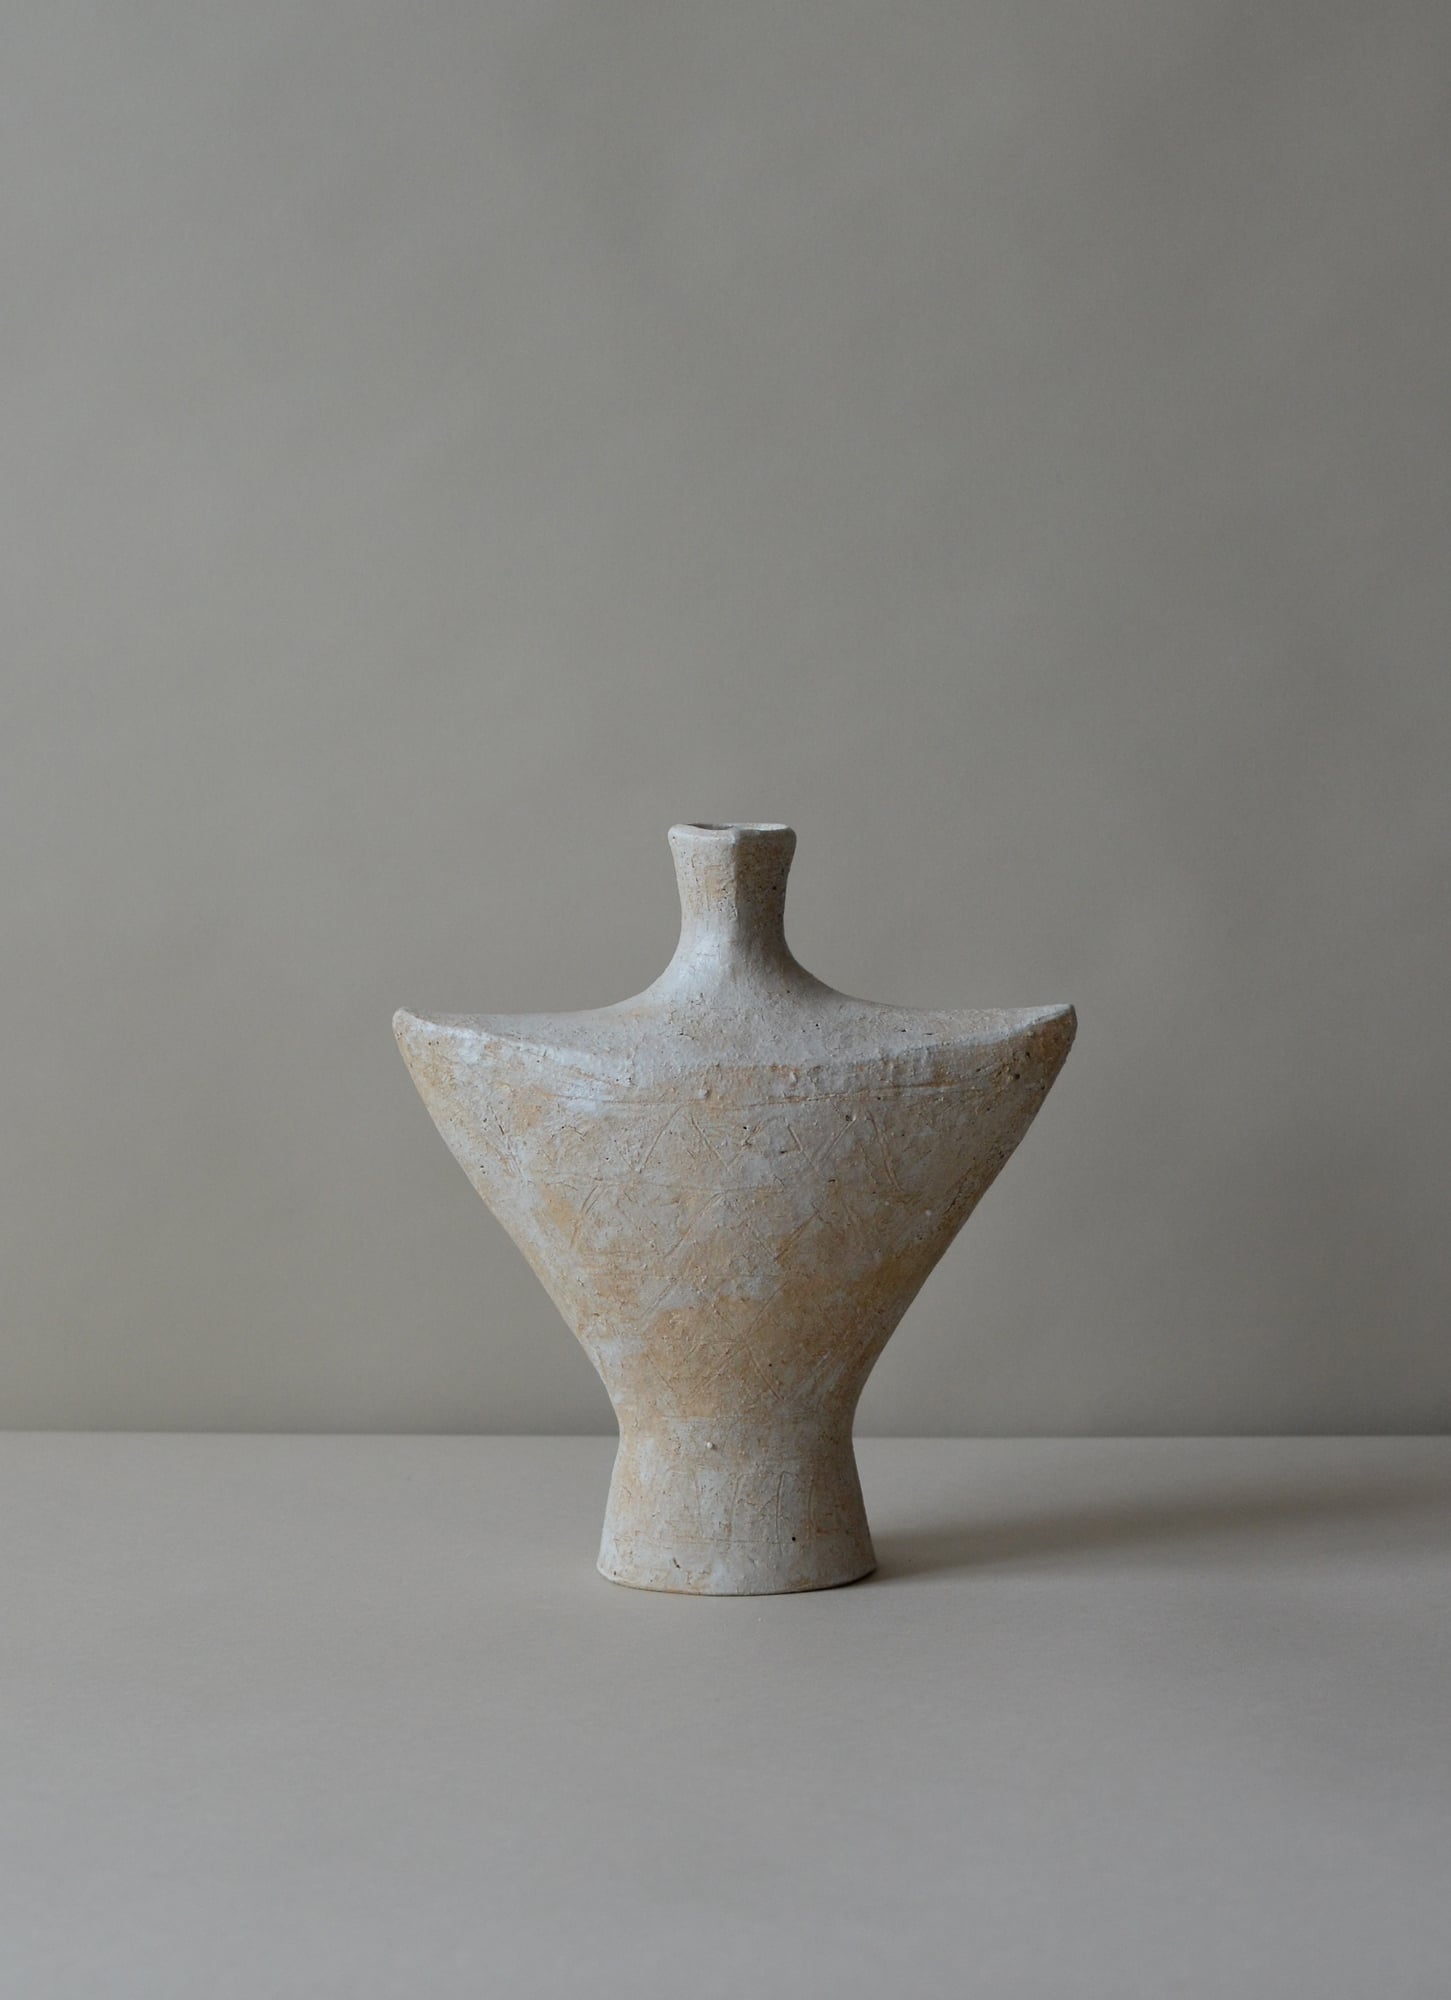 Viv Lee - Handmade stoneware - Wild clay edition - Vessel - Ornis No. 7